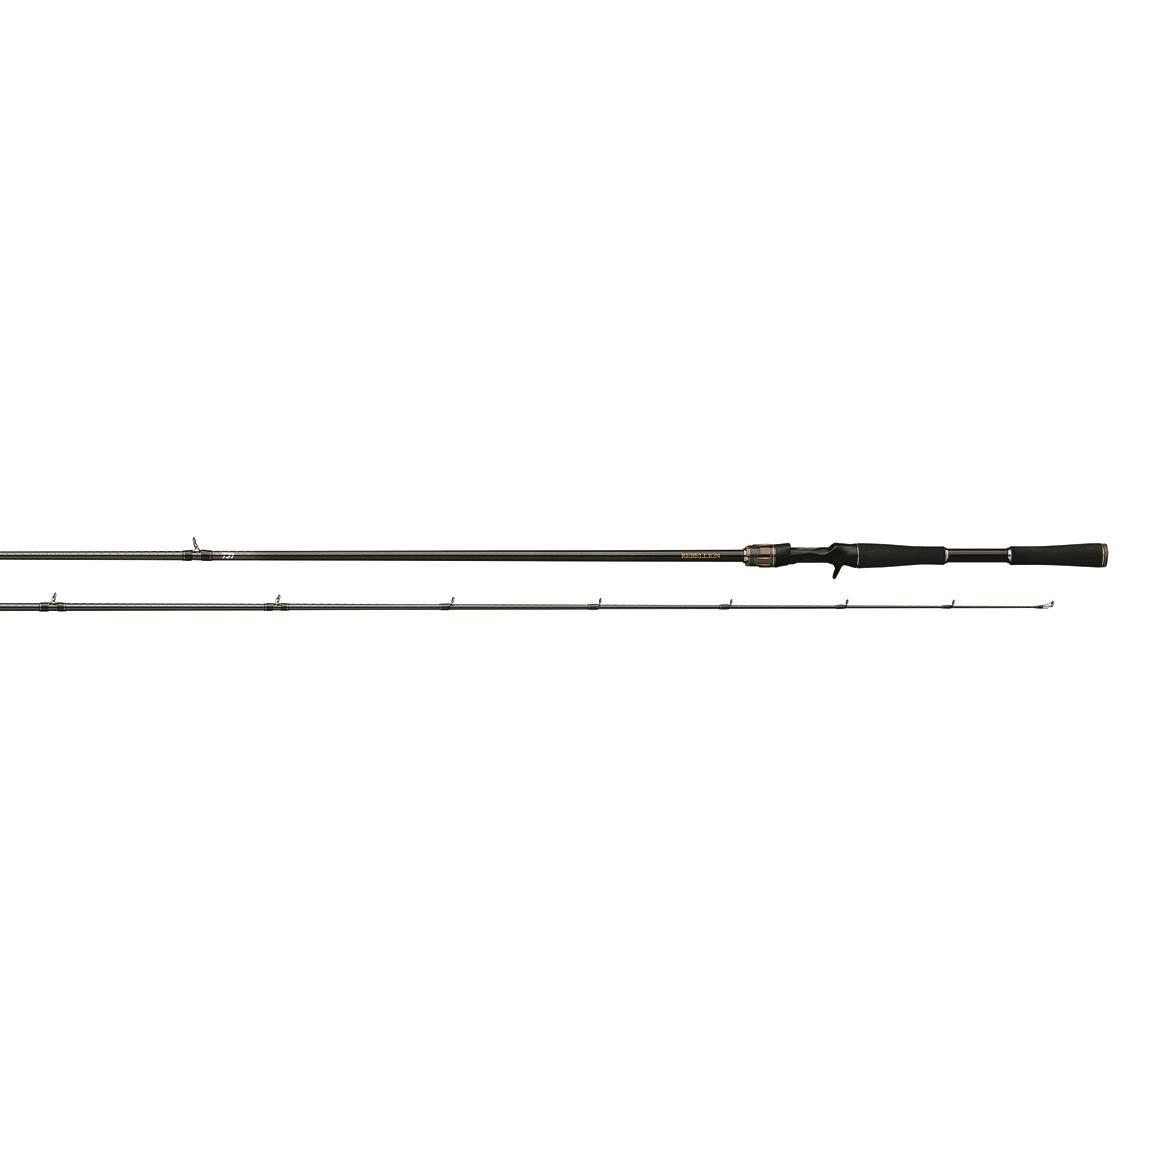 Daiwa Rebellion Casting Rod, 7'6" Length, Heavy Power, Fast Action